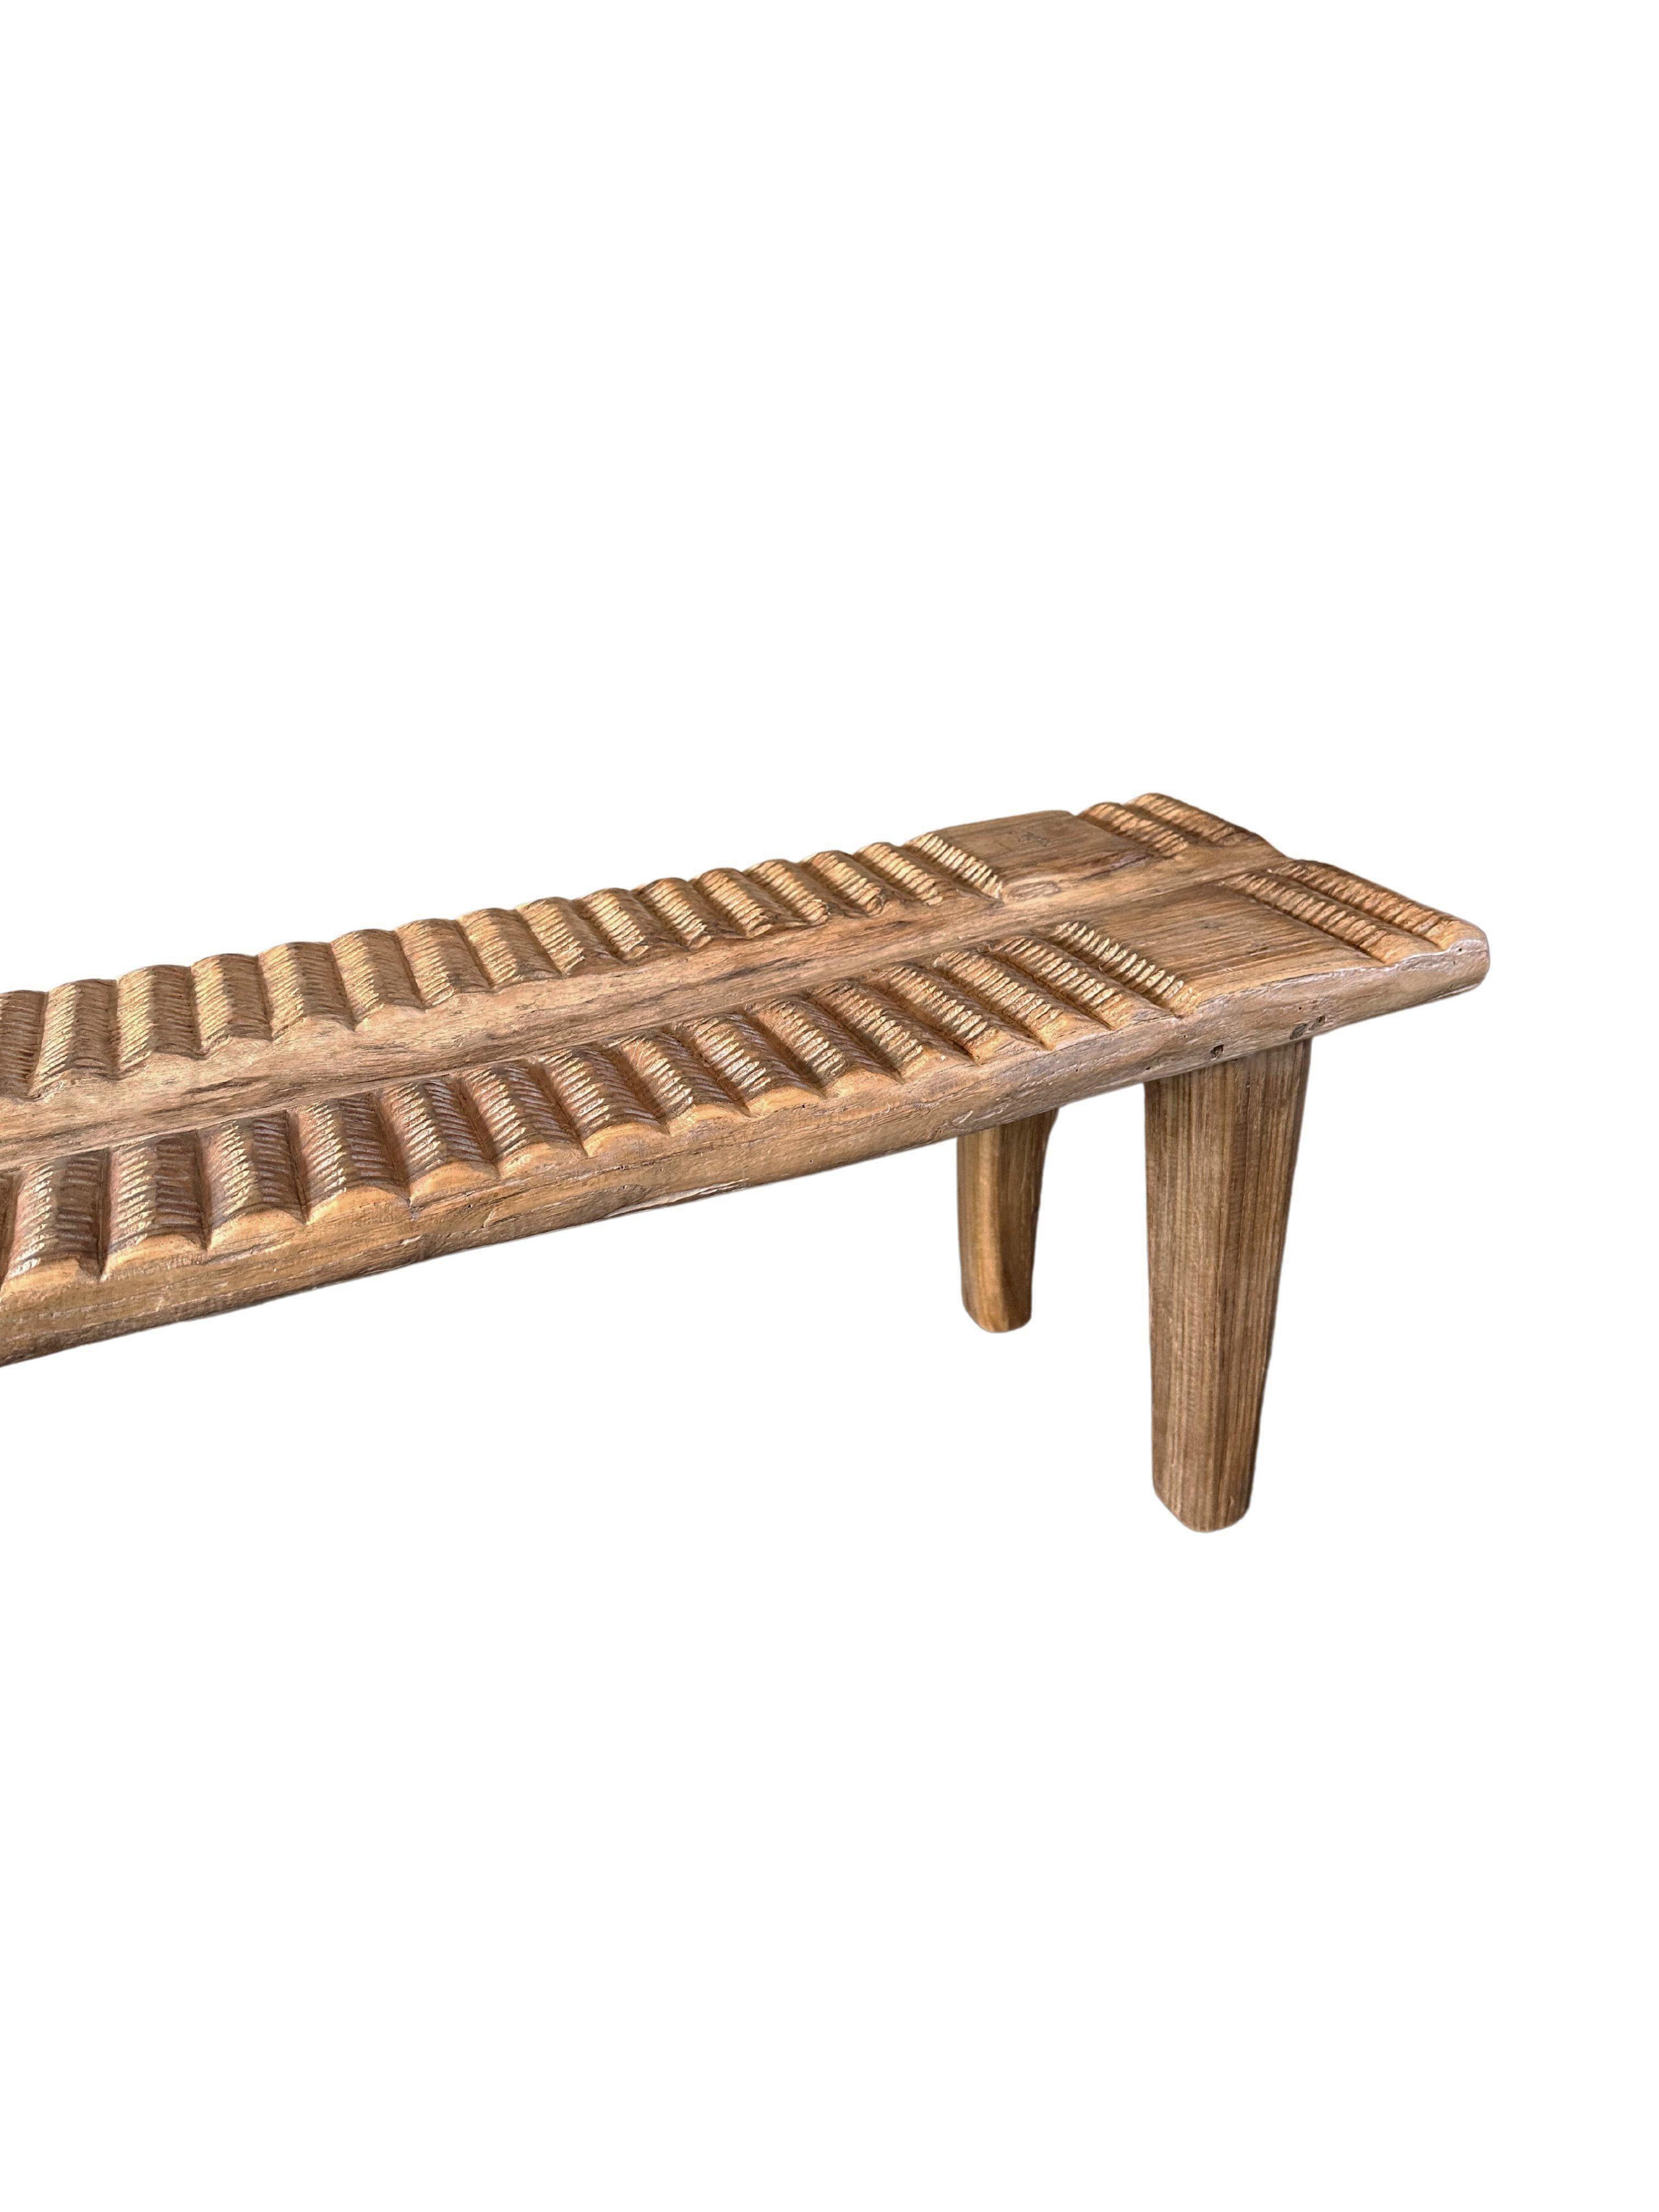 Indonesian Teak Wood Sculptural Long Bench, Carved Detailing, Modern Organic For Sale